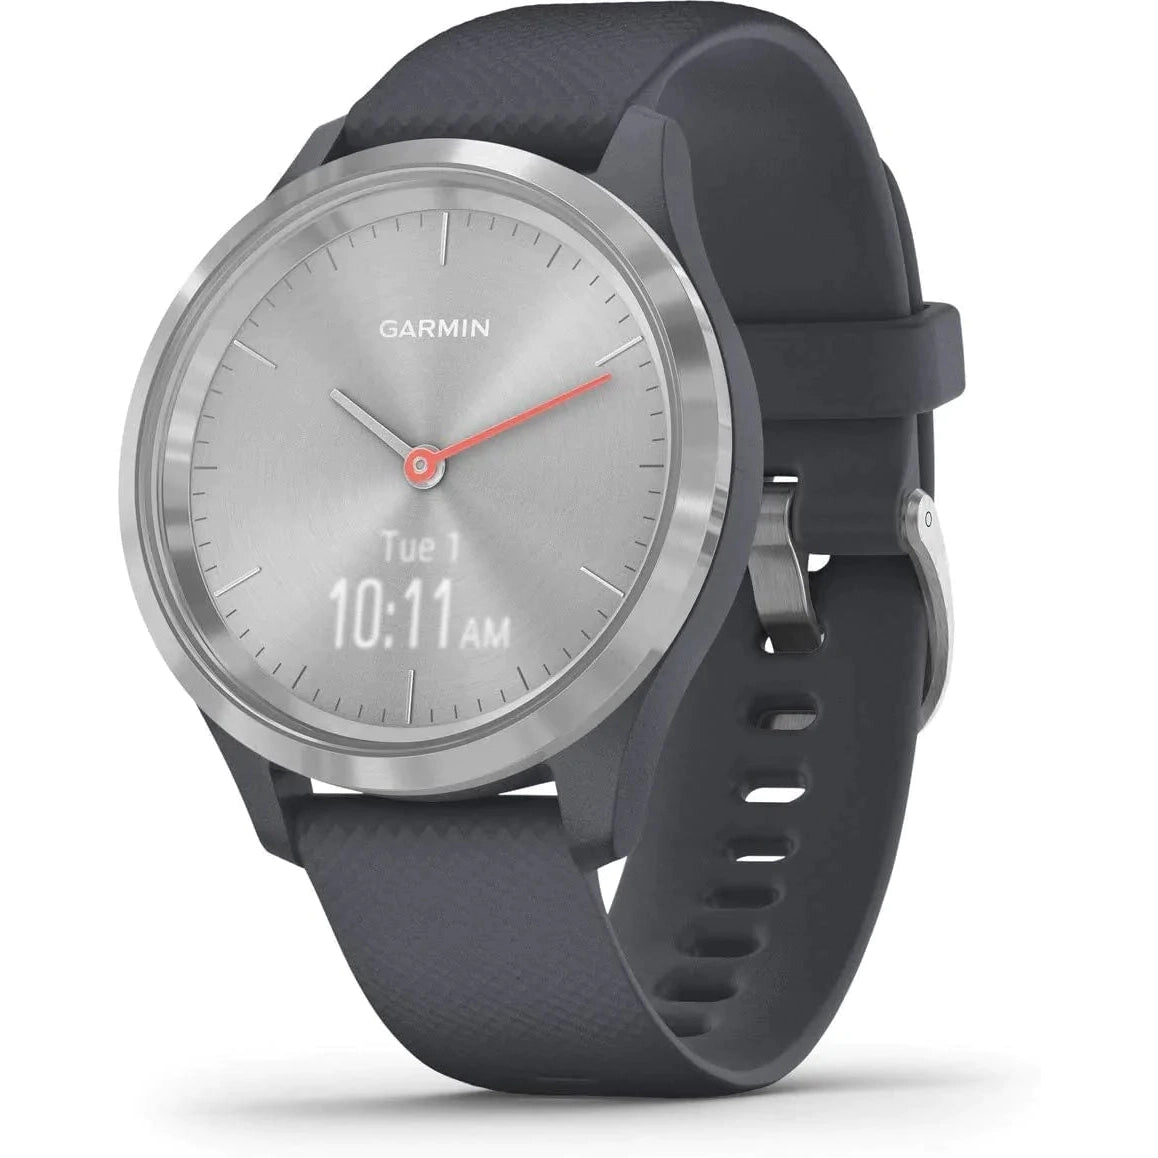 Garmin VivoMove 3S Hybrid Smartwatch - Grey - Refurbished Good